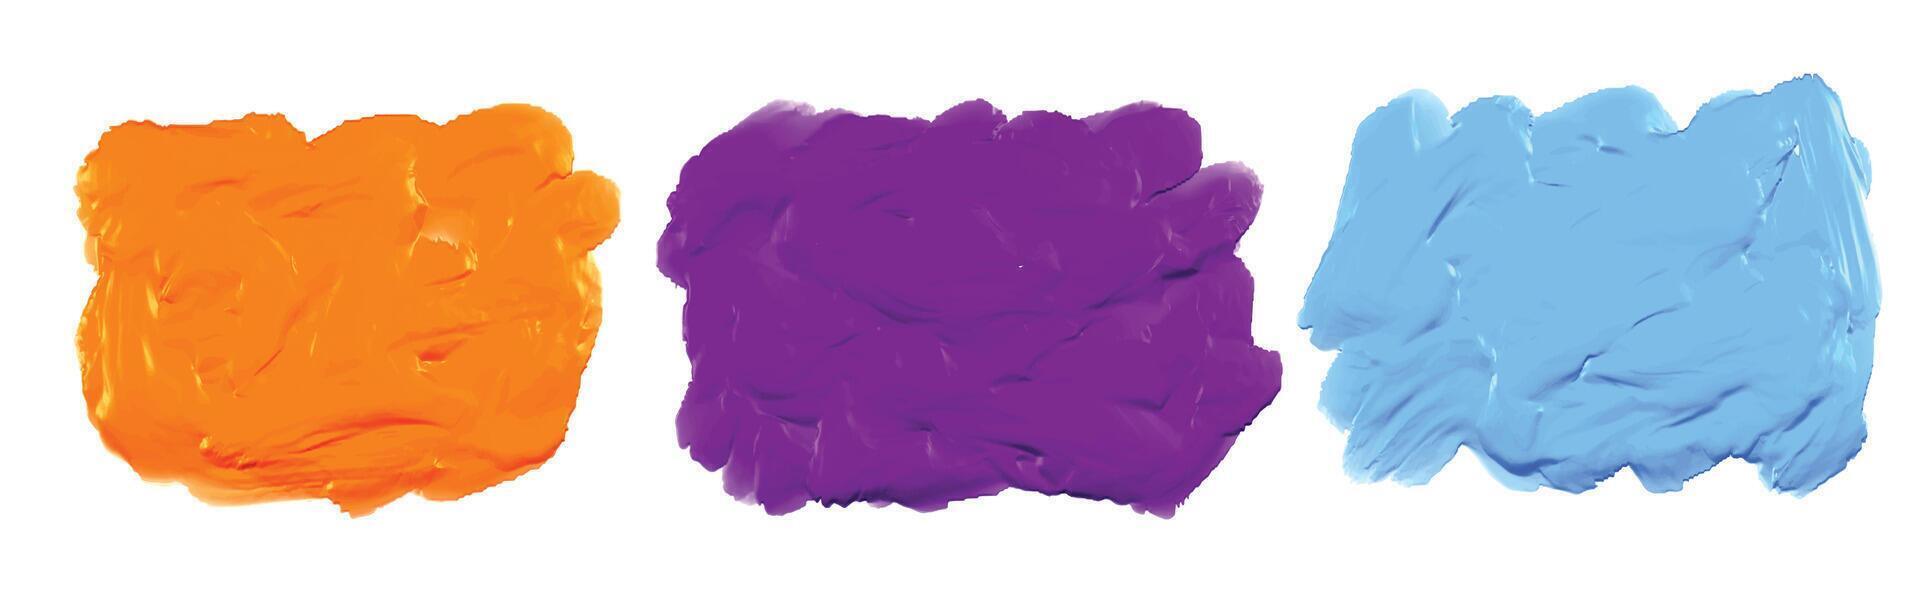 azul púrpura y naranja grueso acrílico acuarela textura vector